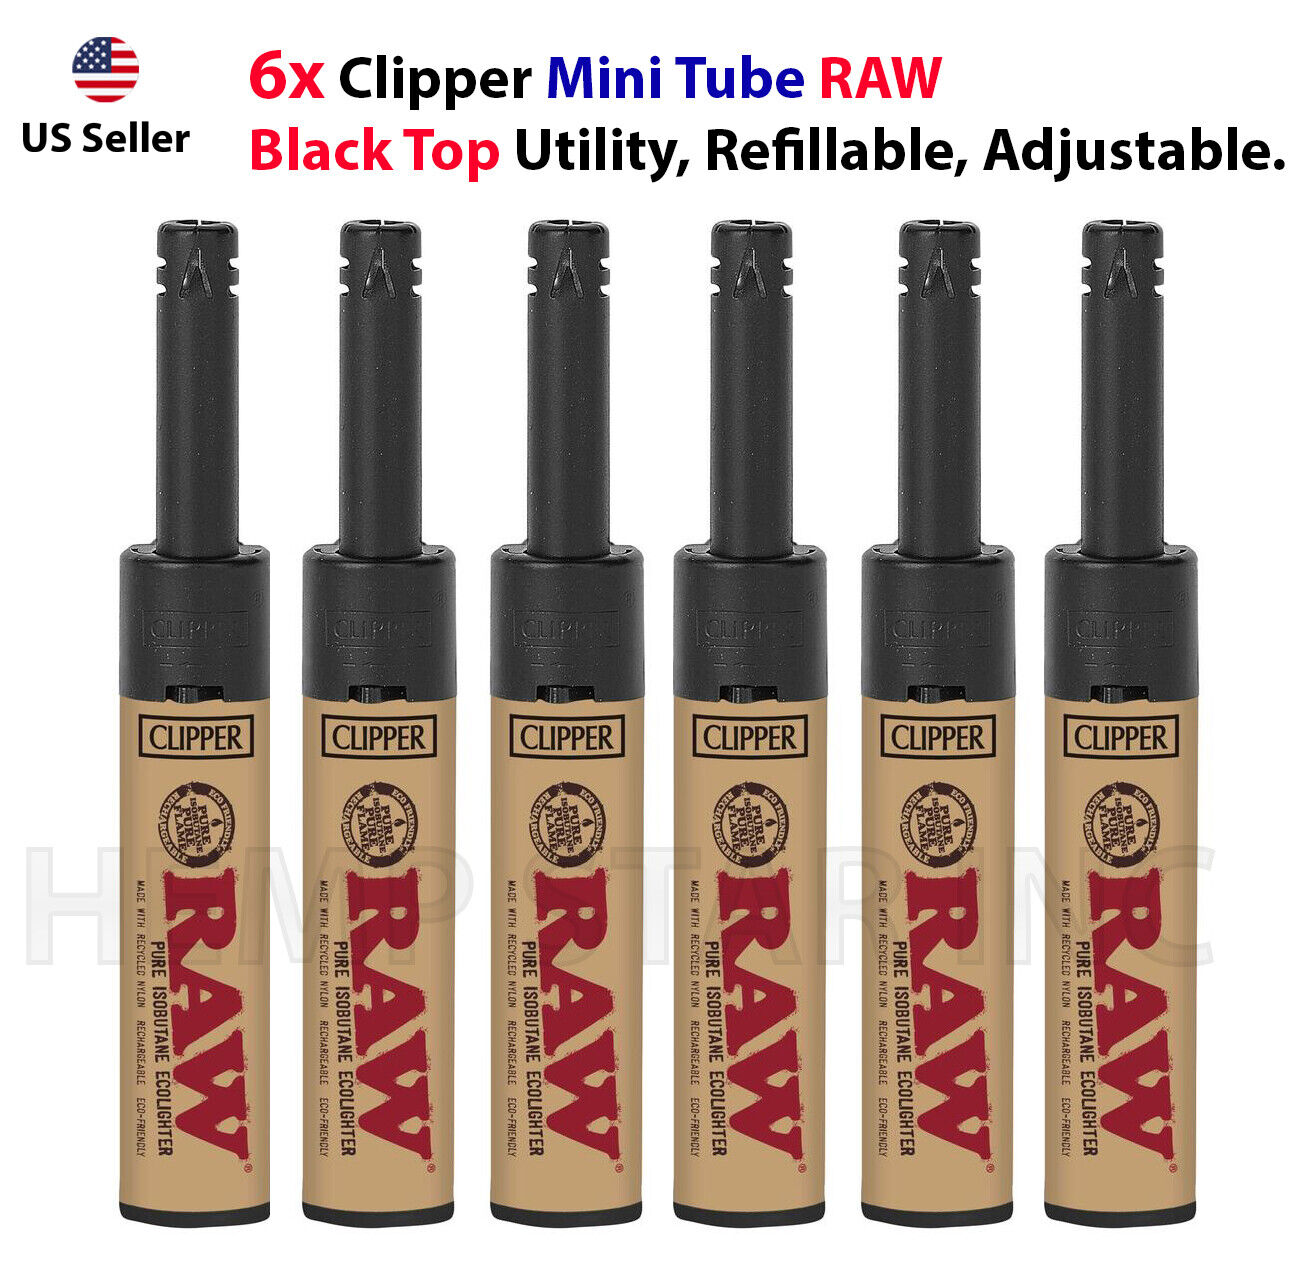 6x Clipper Mini Tube (RAW) Black Top Utility Refillable, Adjustable.